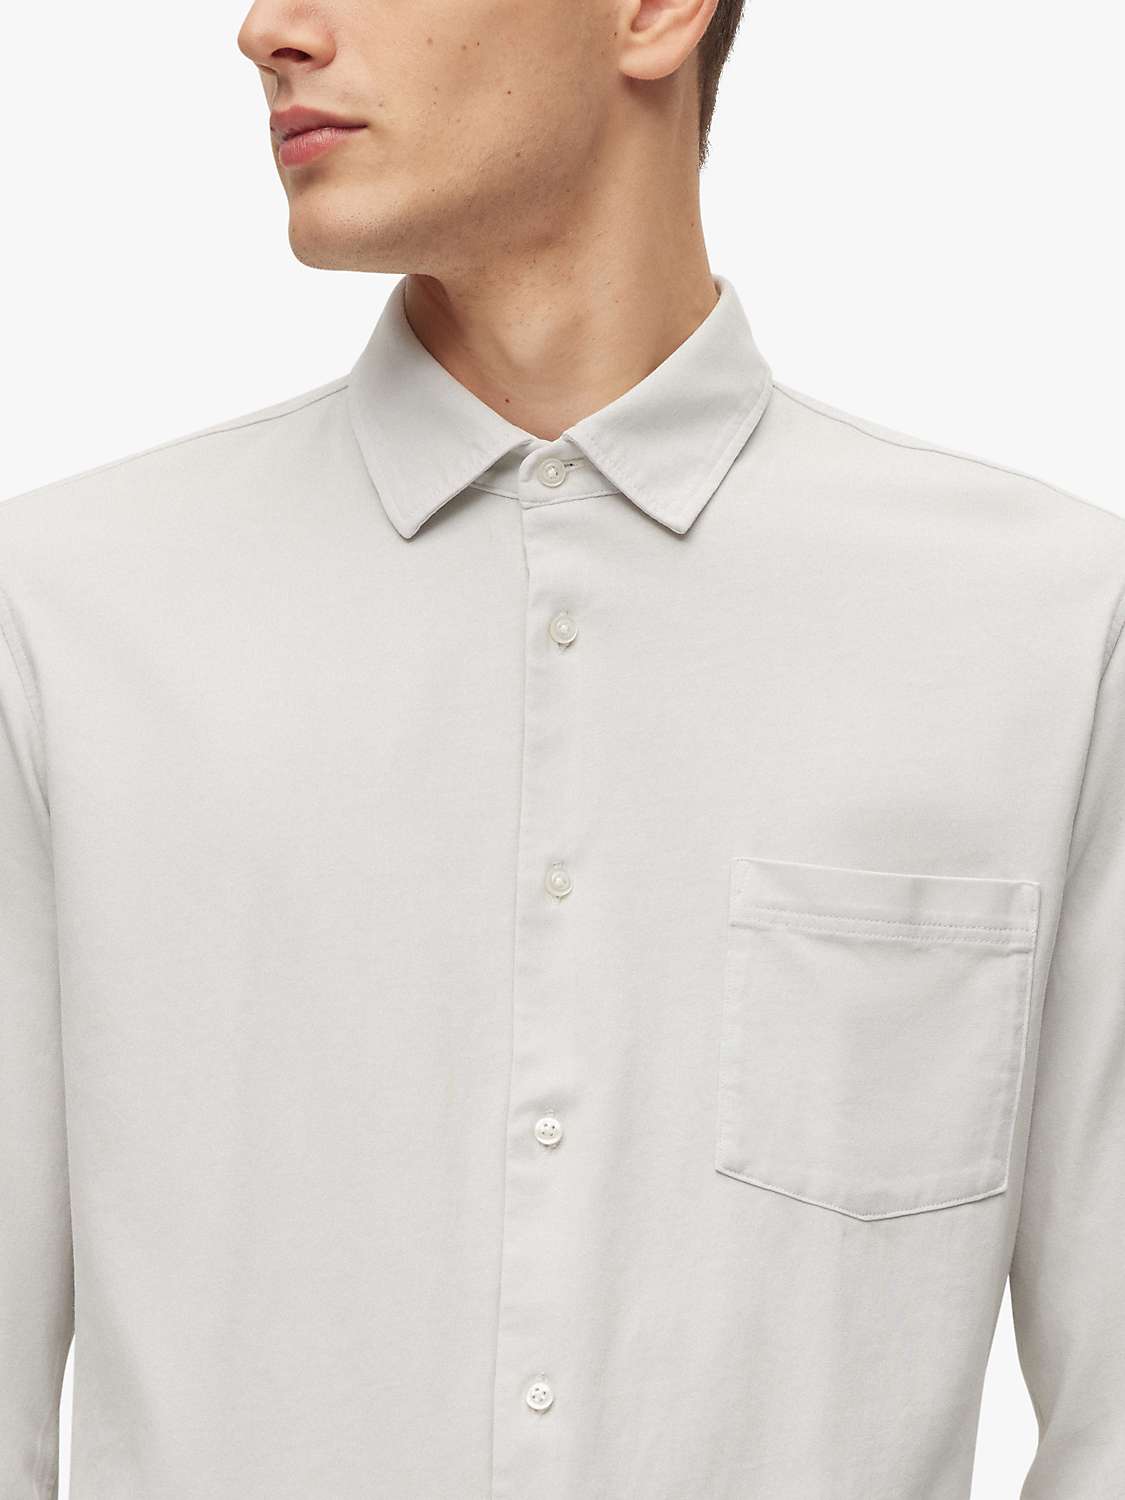 BOSS Mysoft 2 Slim Fit Jersey Cotton Shirt, Pastel Grey at John Lewis ...